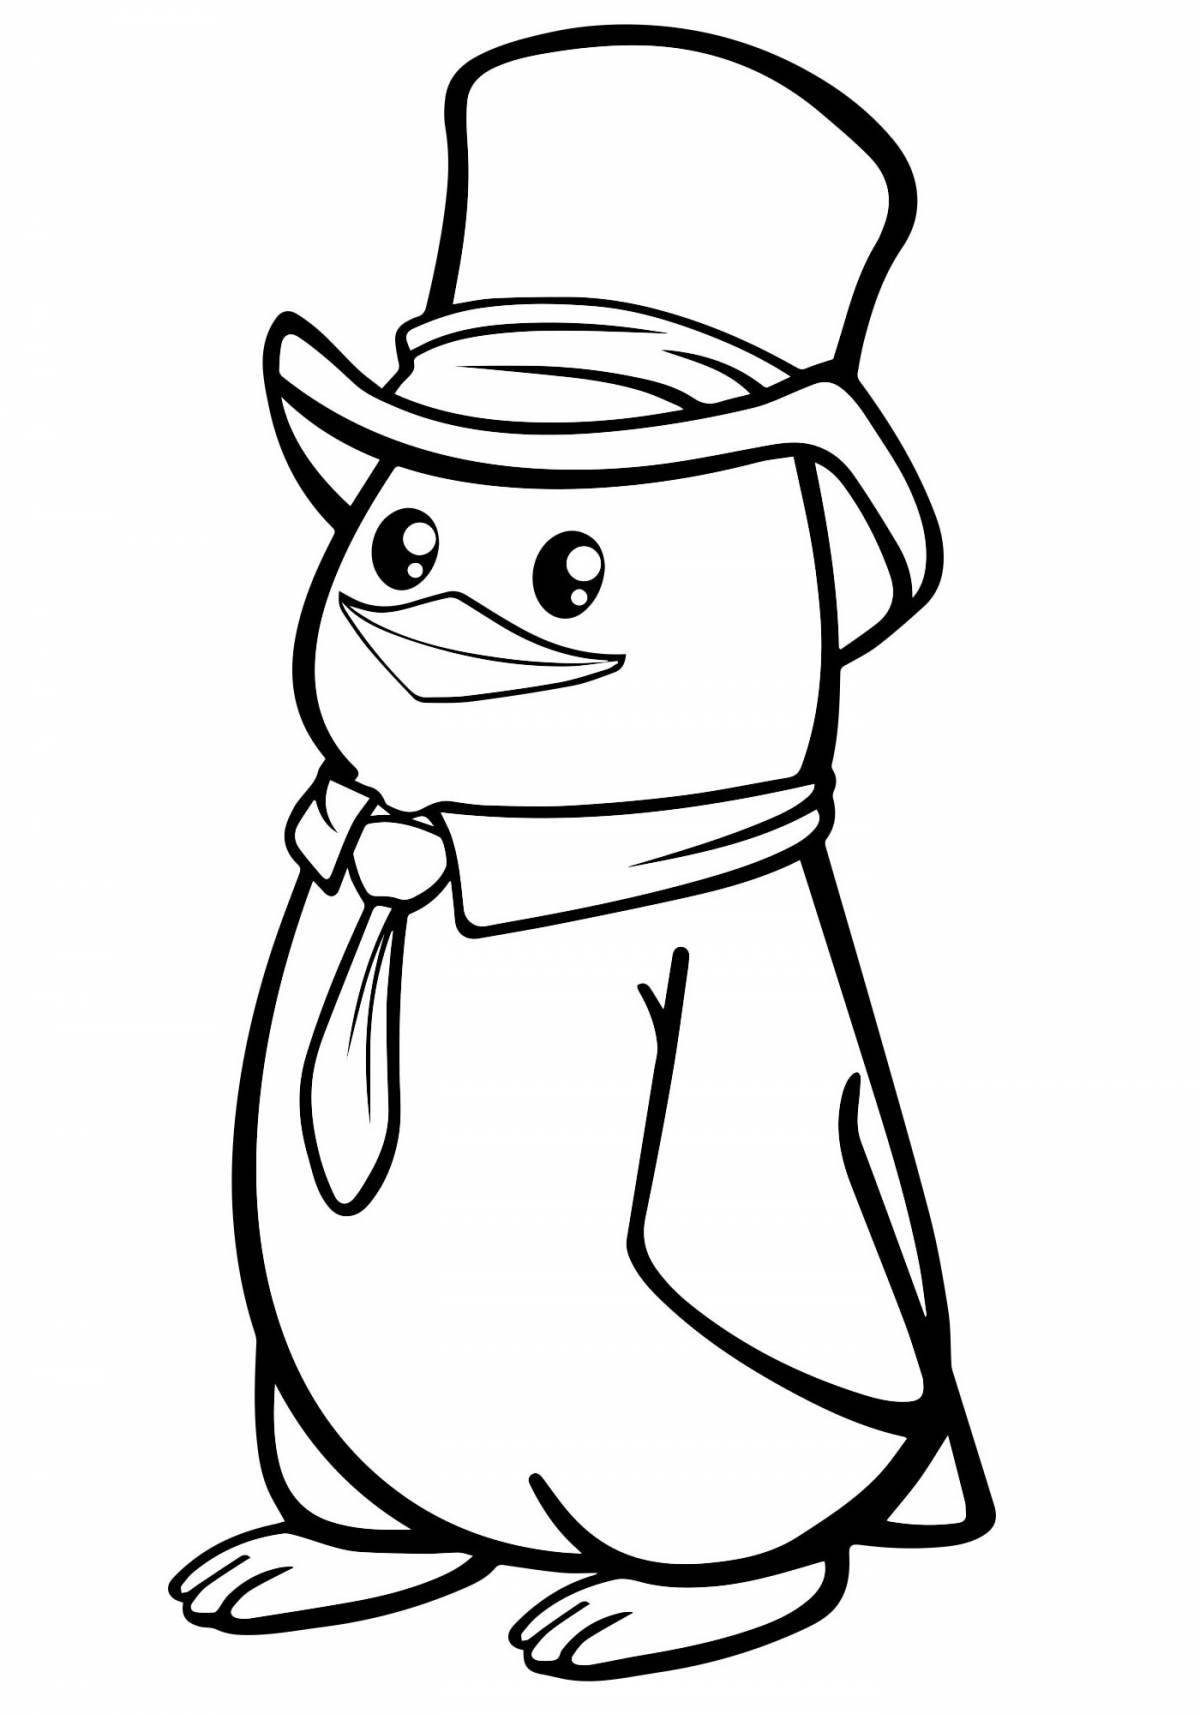 Playful penguin drawing for kids